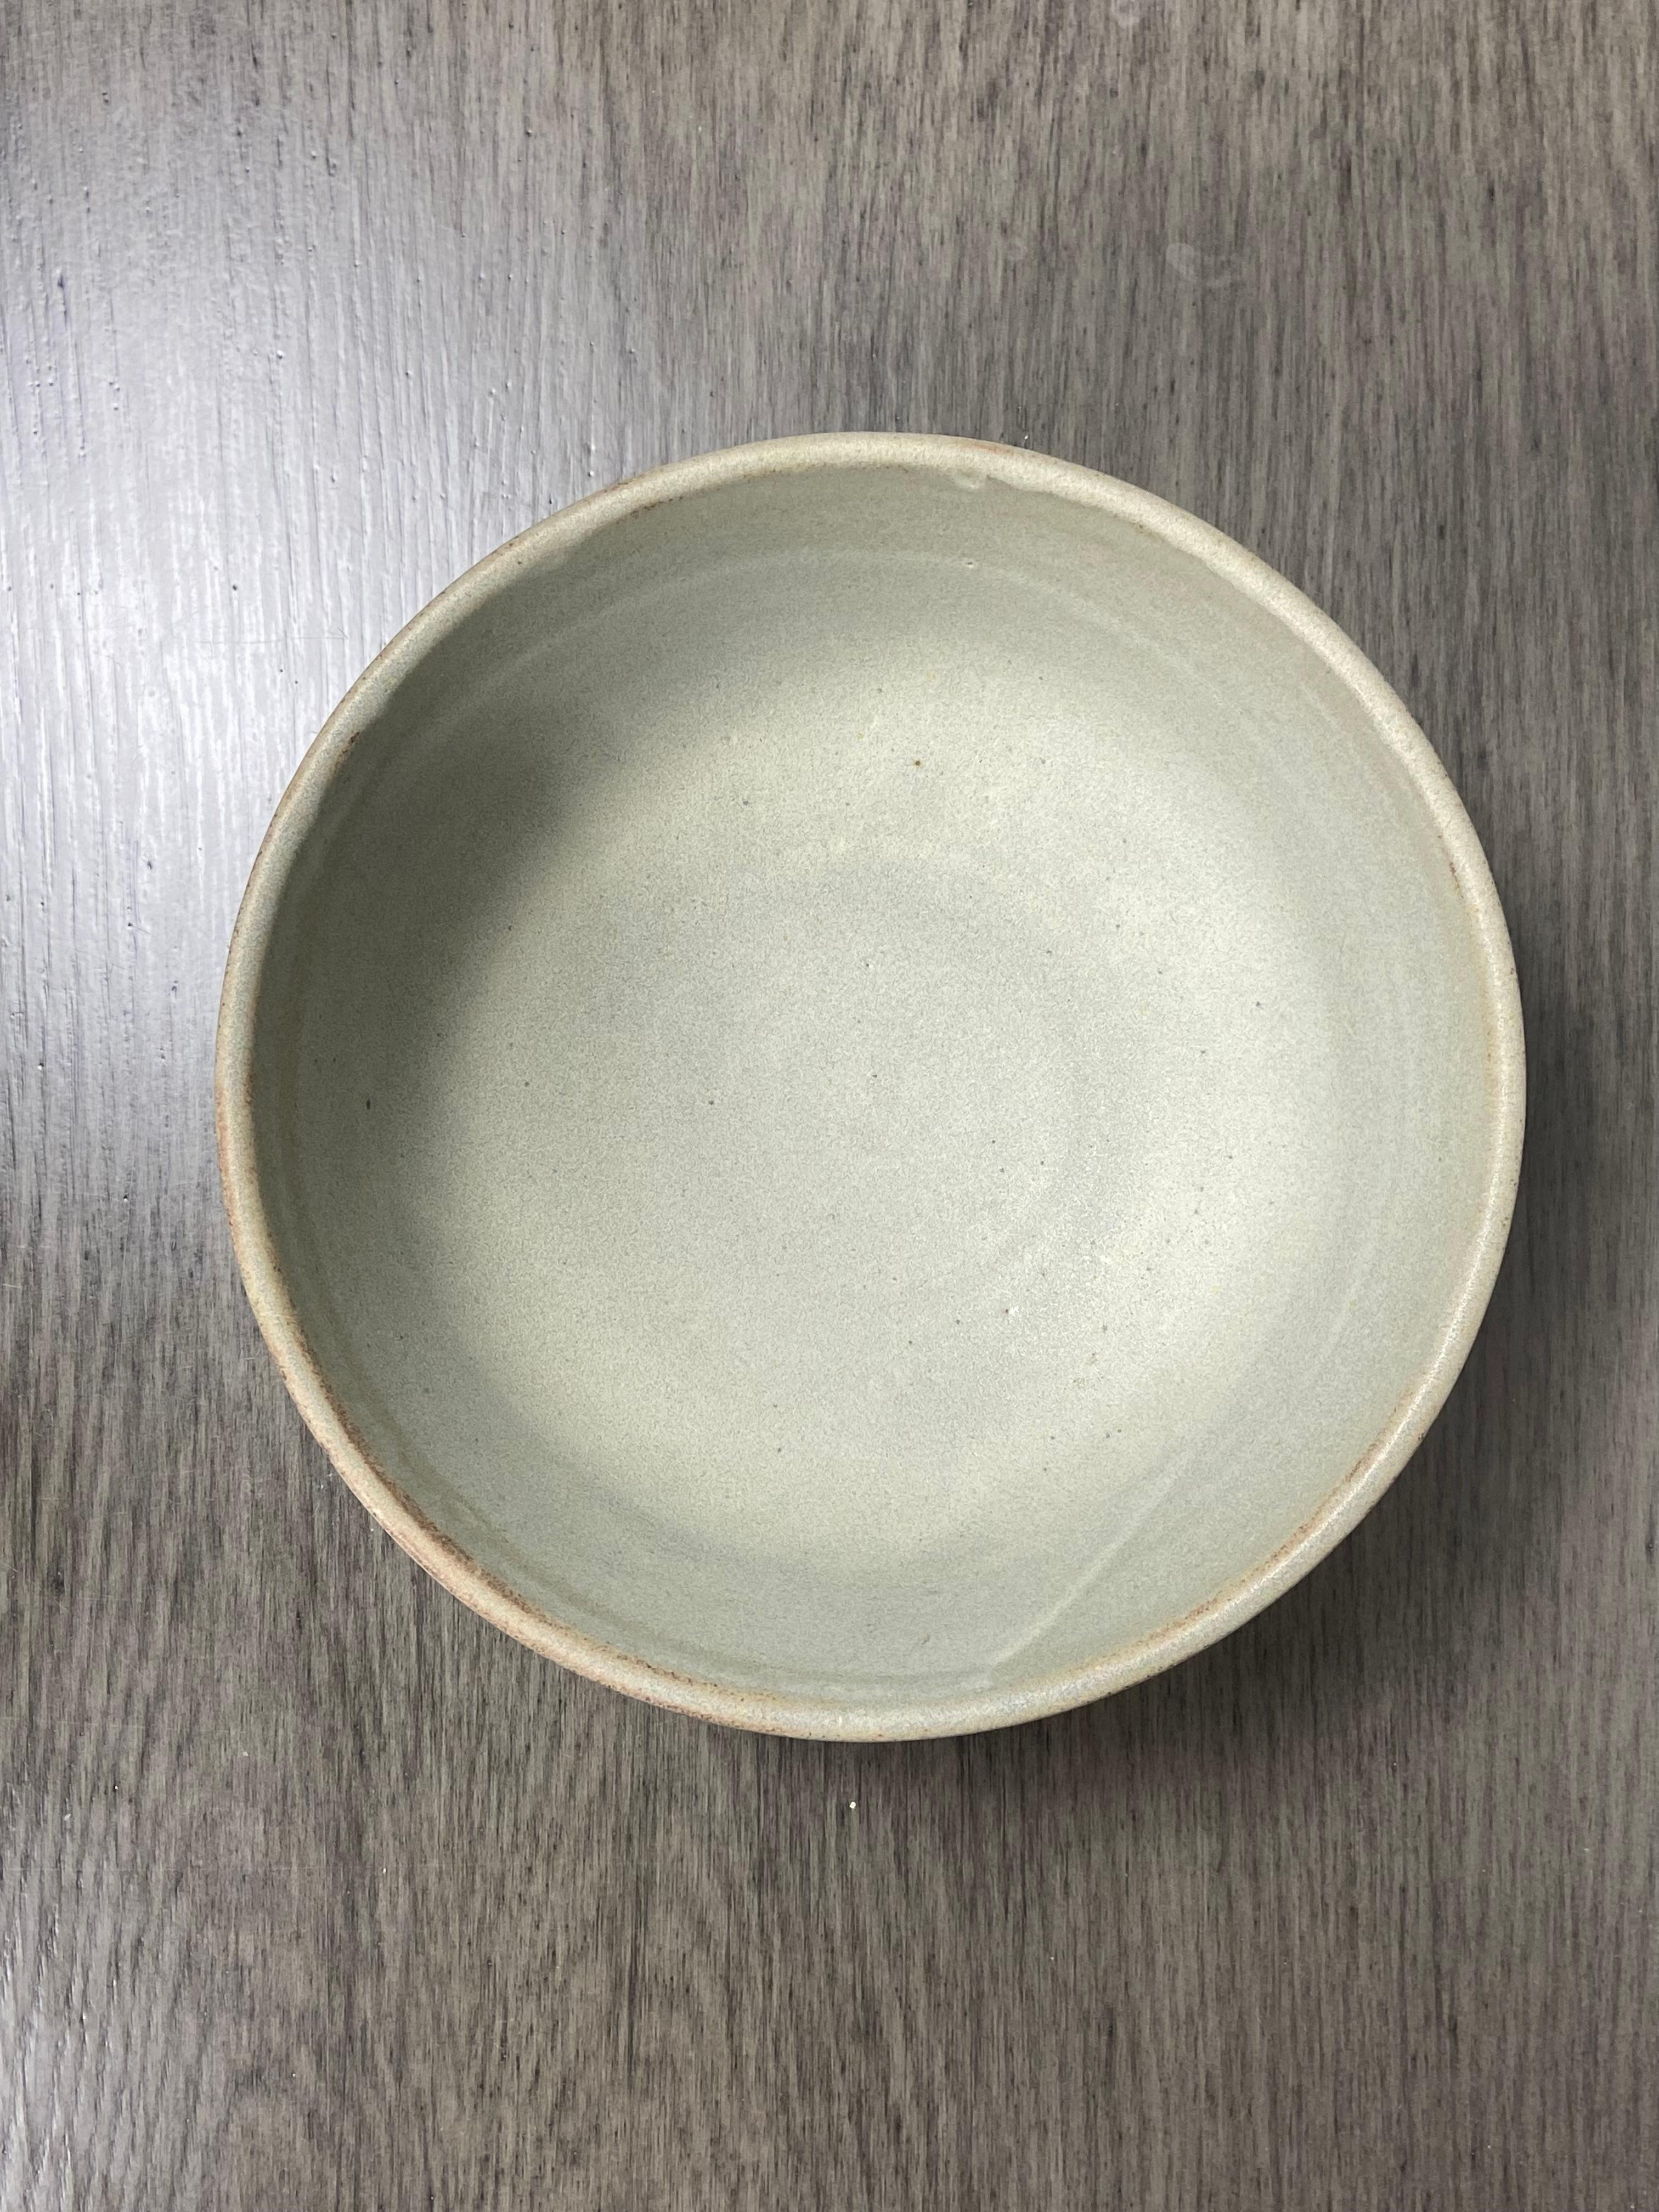 Celadon Ceramic Bowl With Drip Glaze For Sale 4